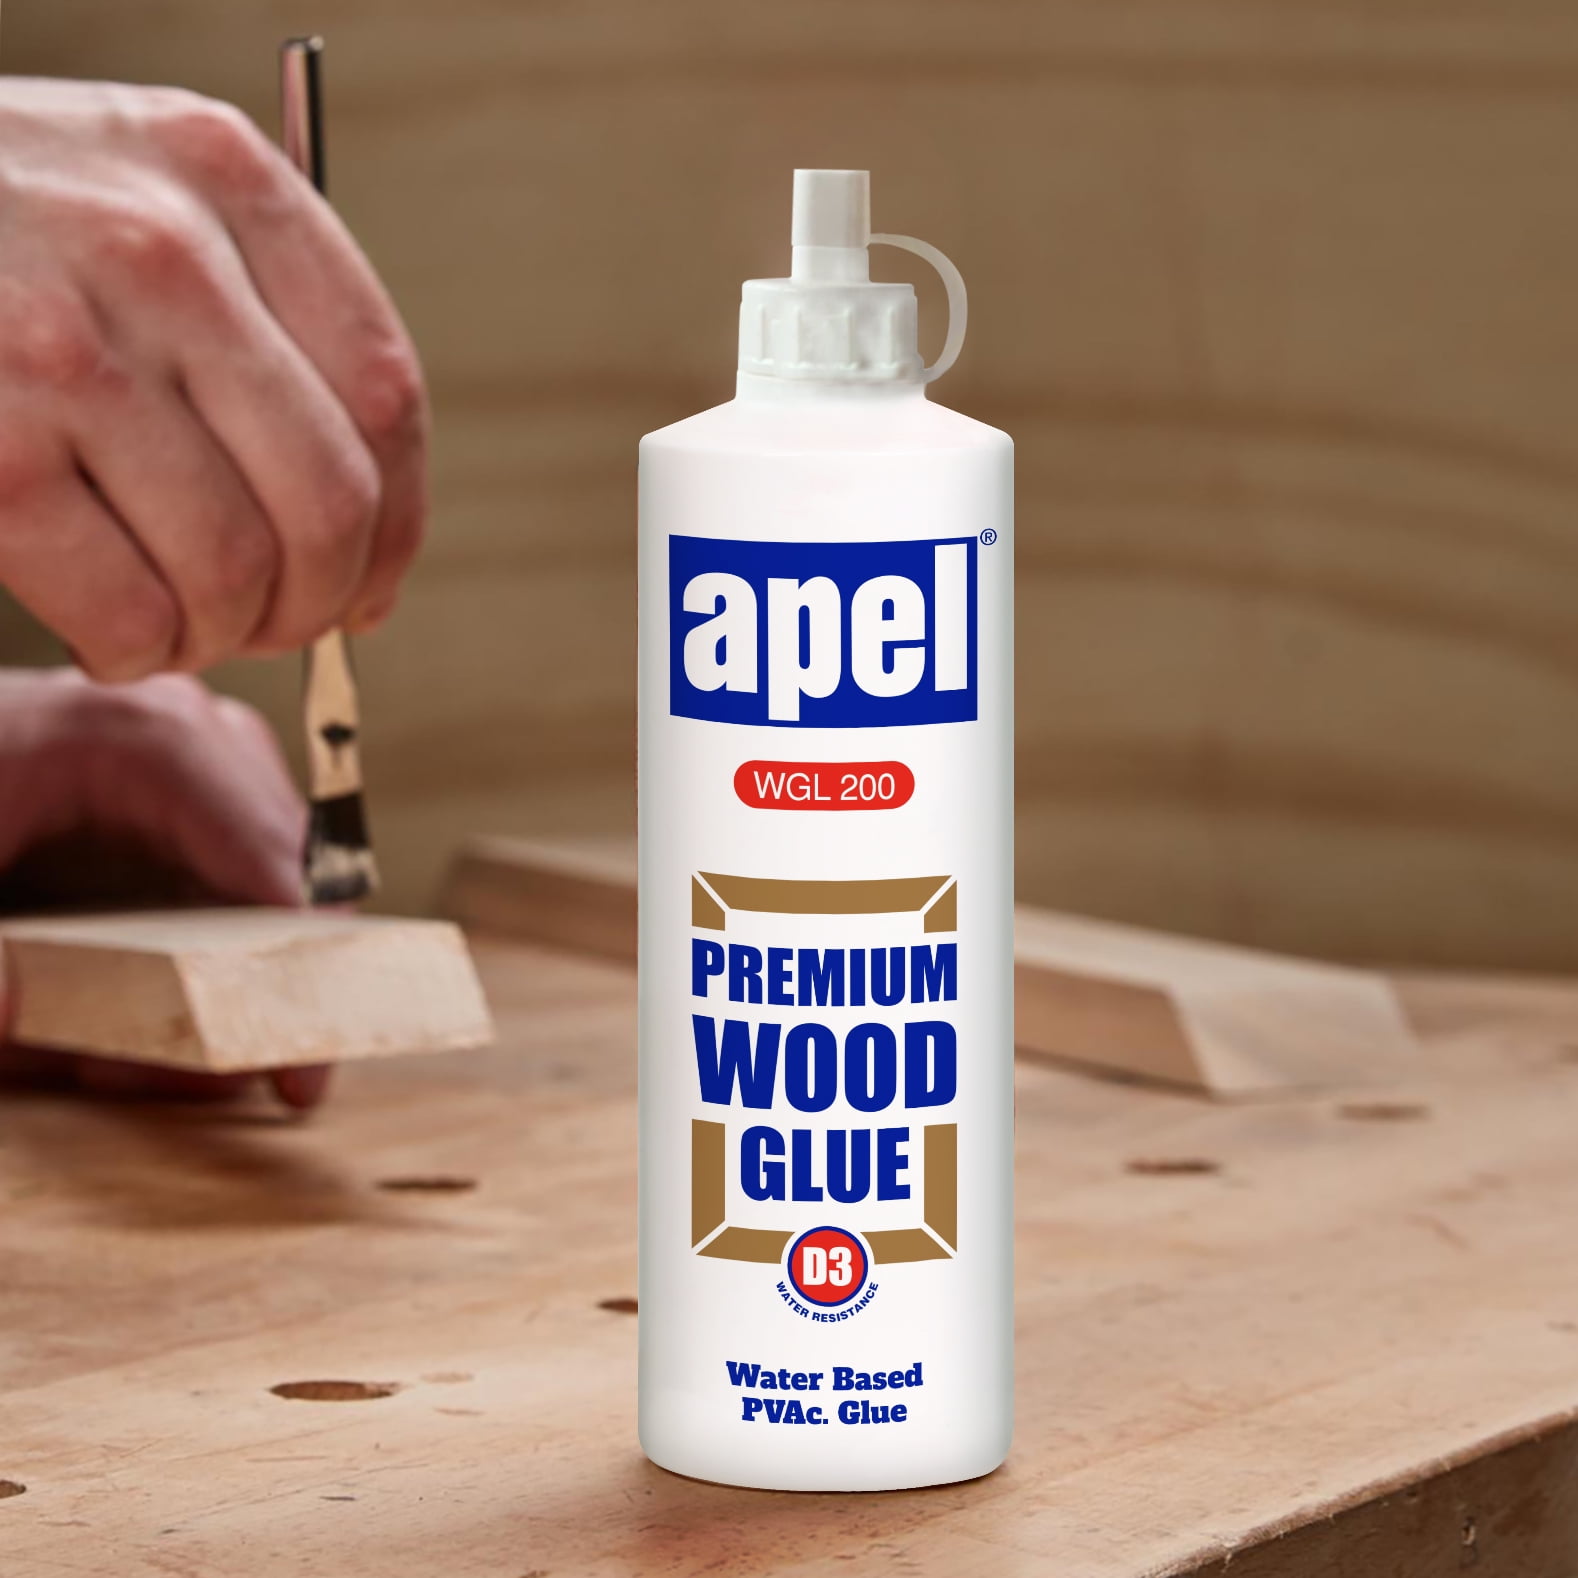 The Ultimate Guide to PVA Wood Glue - Apel USA